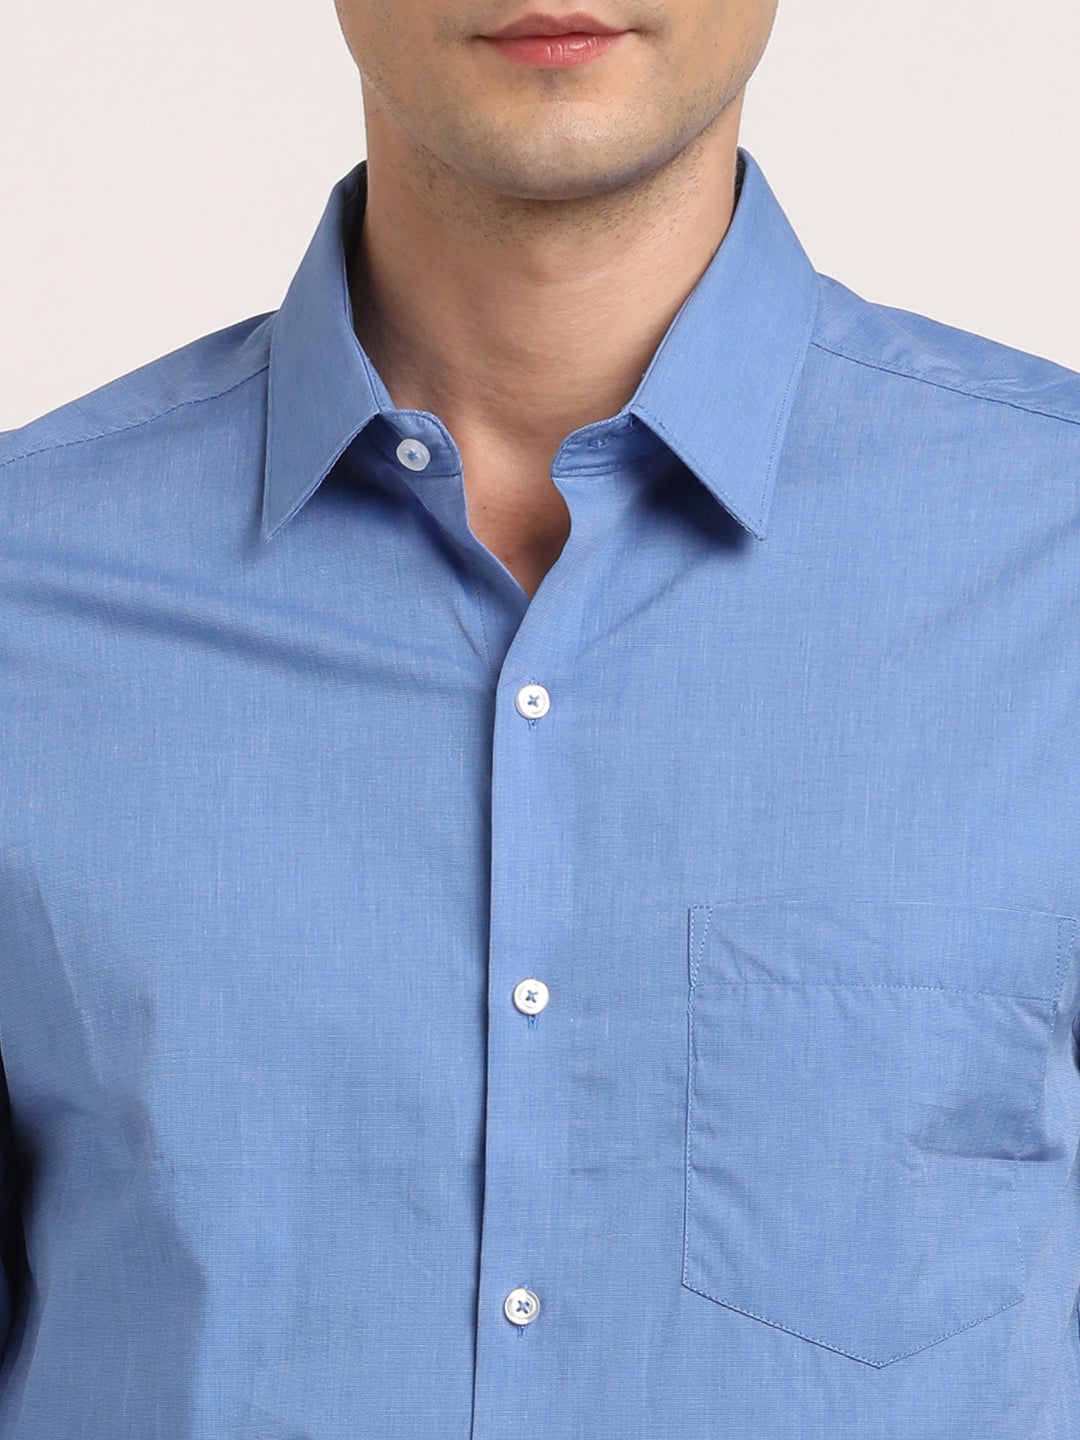 100% Cotton Light Blue Plain Slim Fit Full Sleeve Formal Shirt